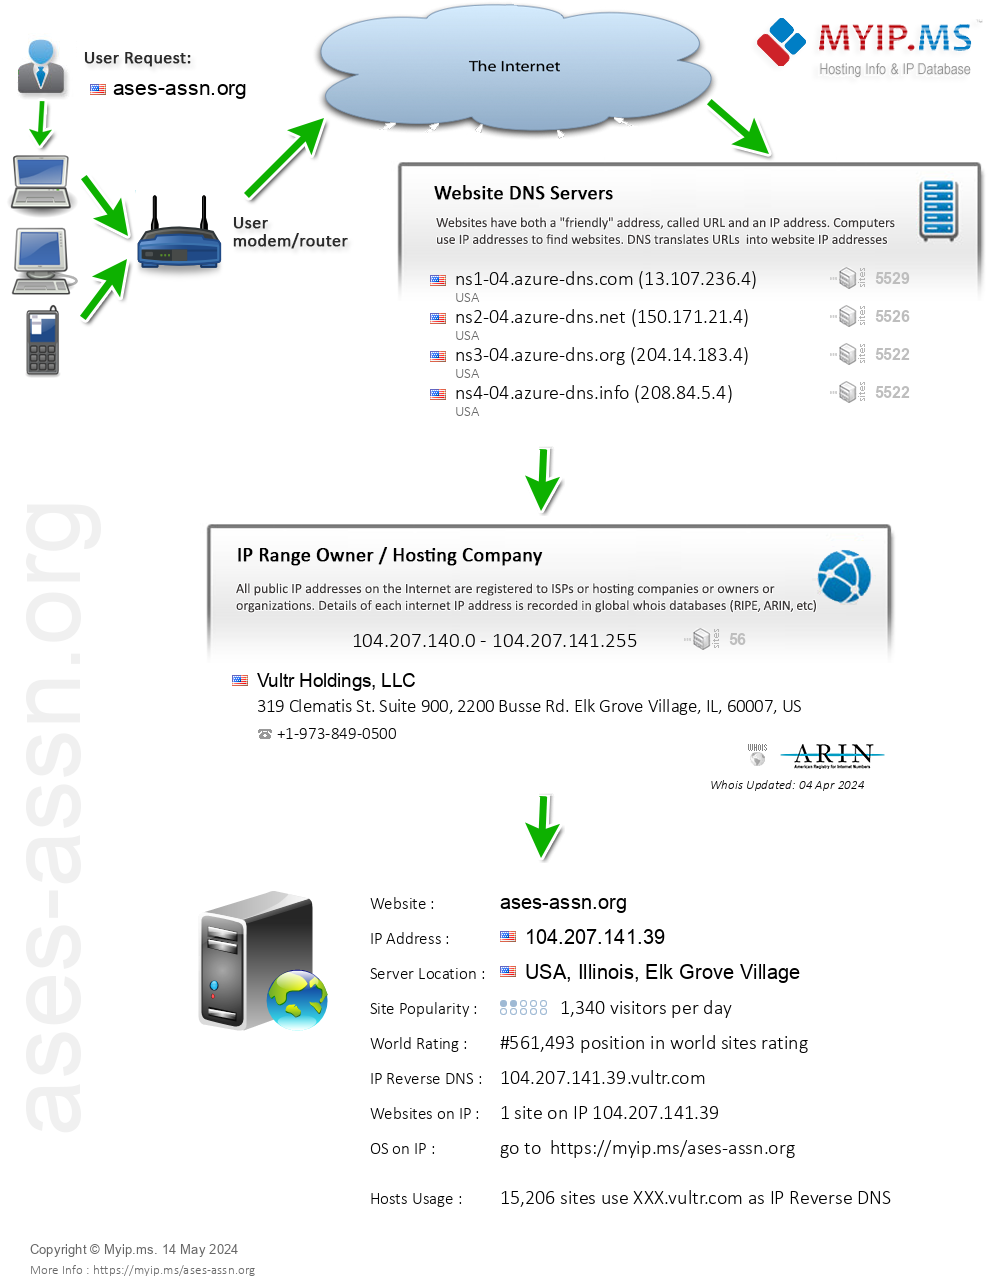 Ases-assn.org - Website Hosting Visual IP Diagram